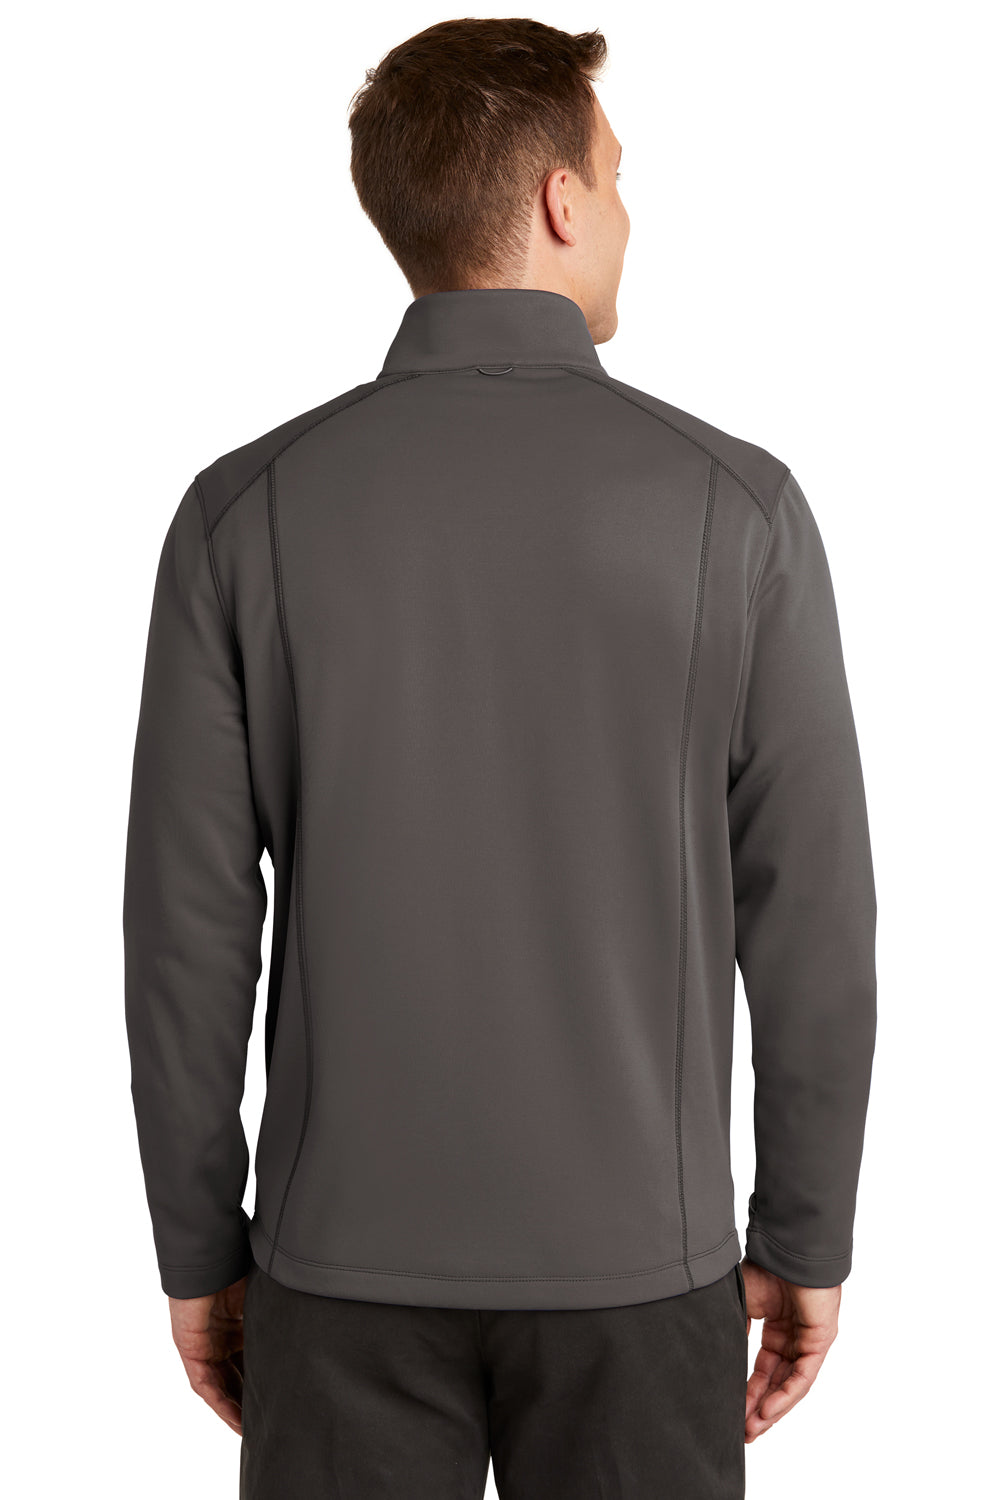 Port Authority F904 Mens Collective Full Zip Smooth Fleece Jacket Graphite Grey Back